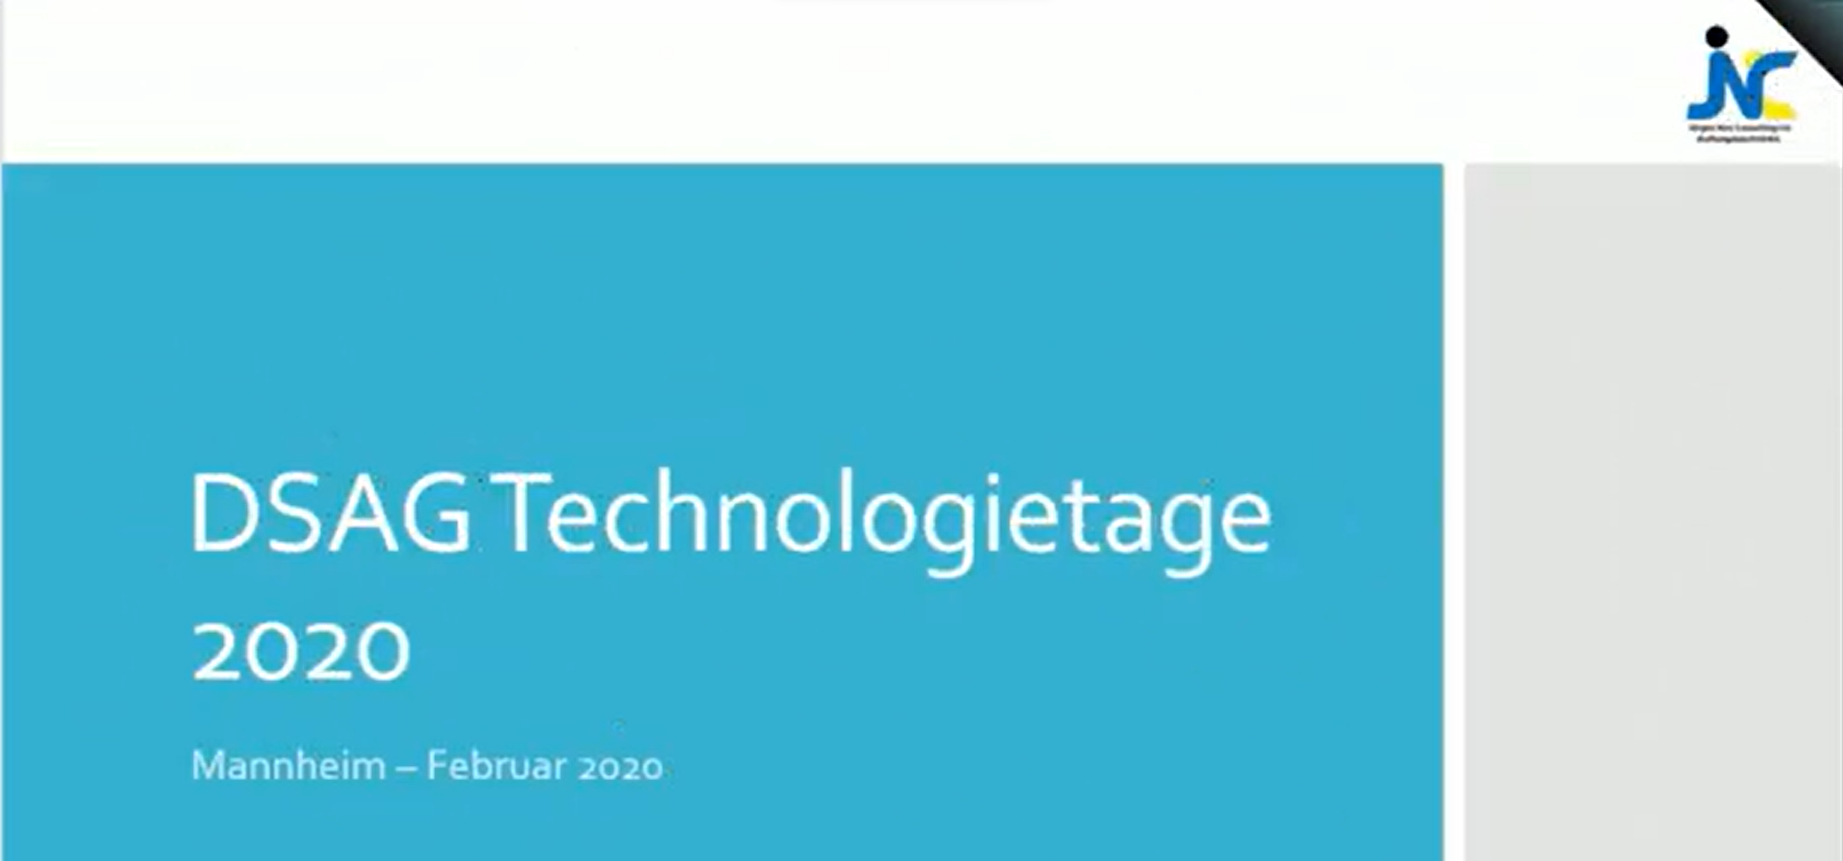 DSAG Technologietage 2020